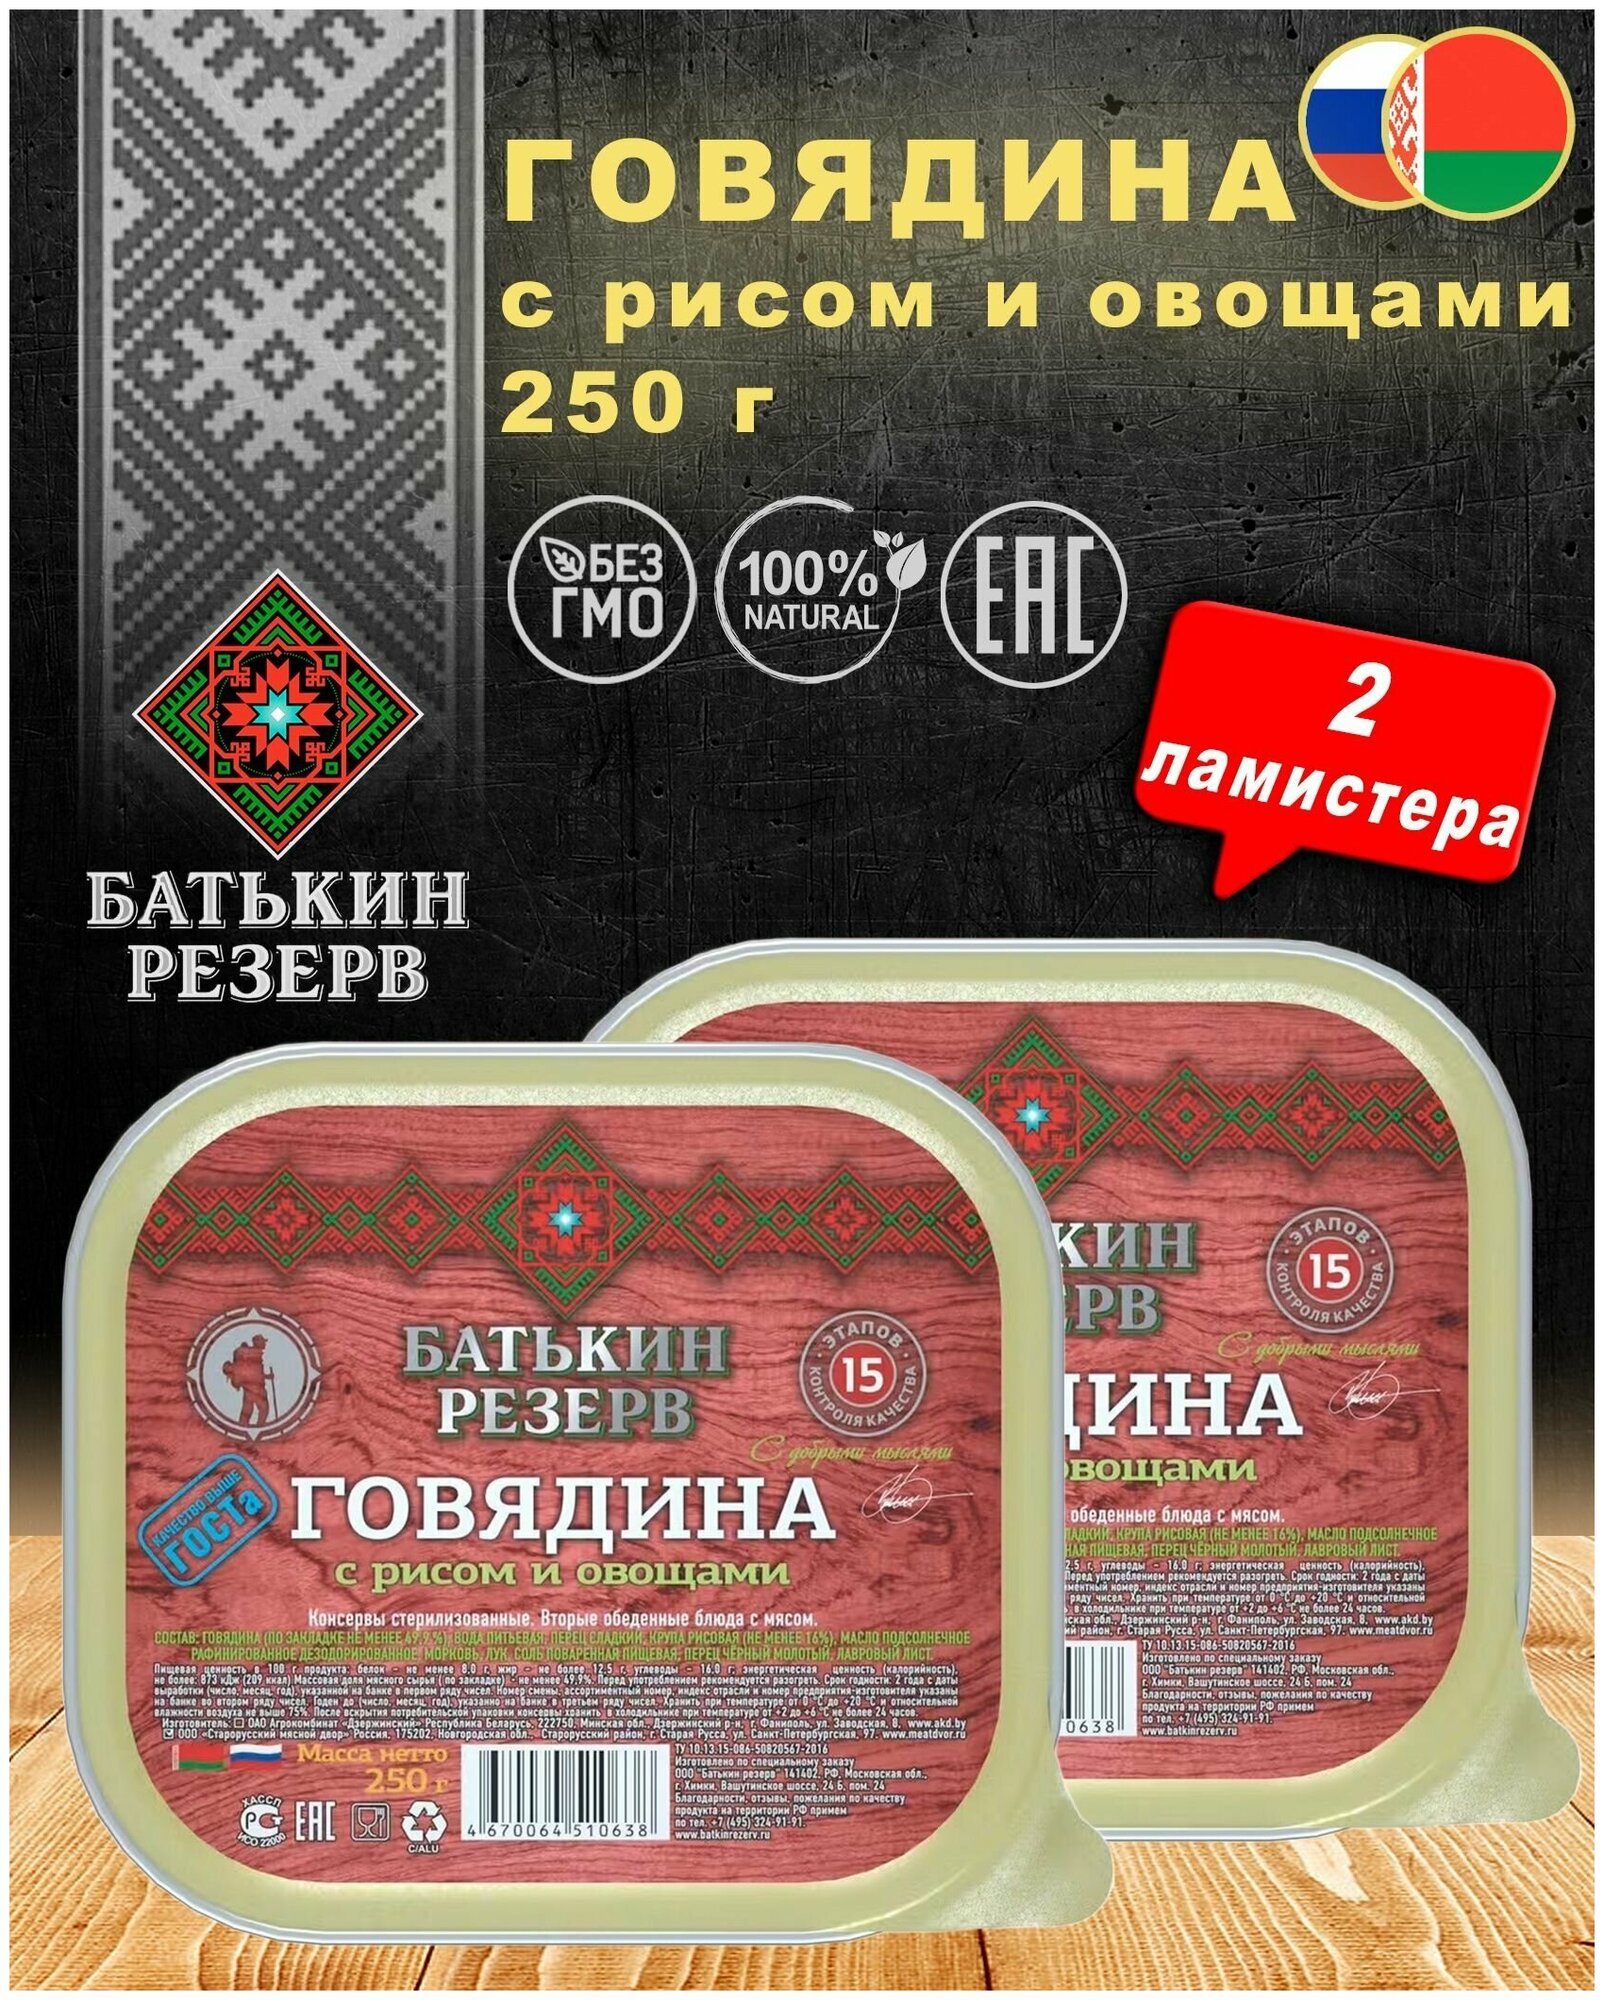 Говядина с рисом и овощами, Батькин резерв, ГОСТ, ламистер, 2 шт. по 250 г